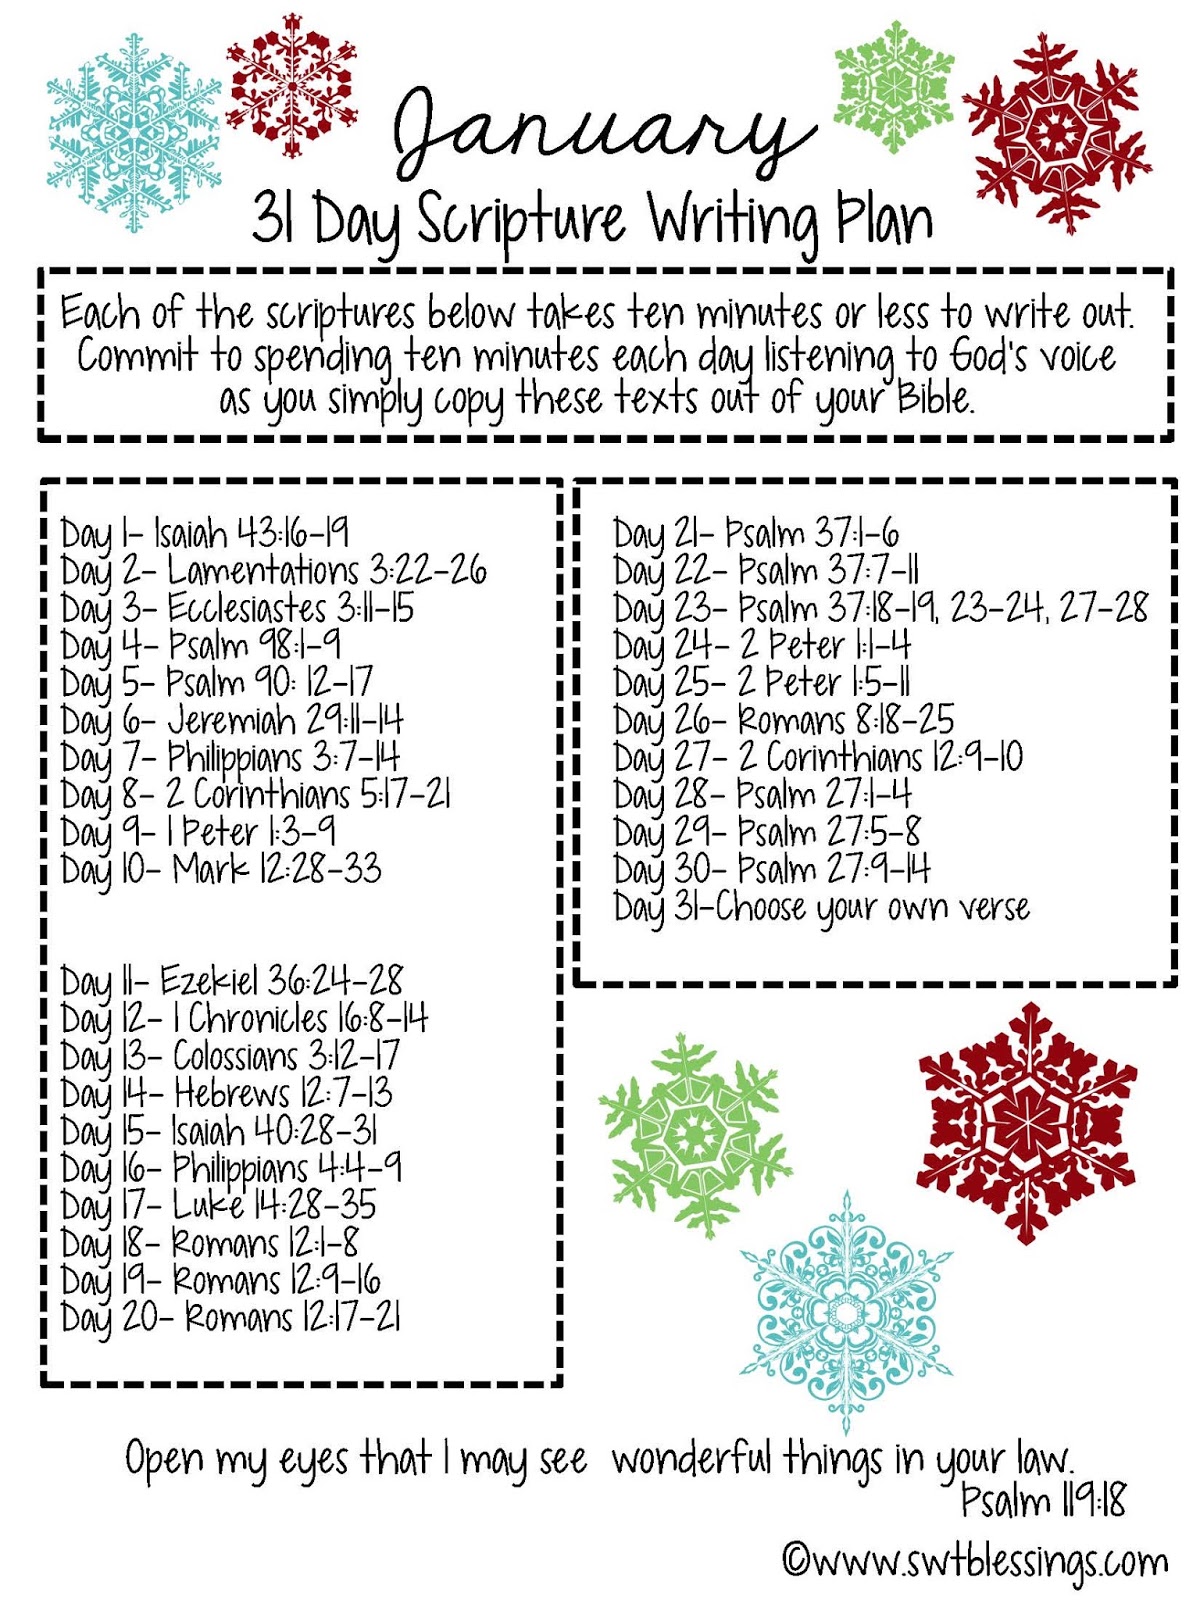 sweet-blessings-january-scripture-writing-plan-2016